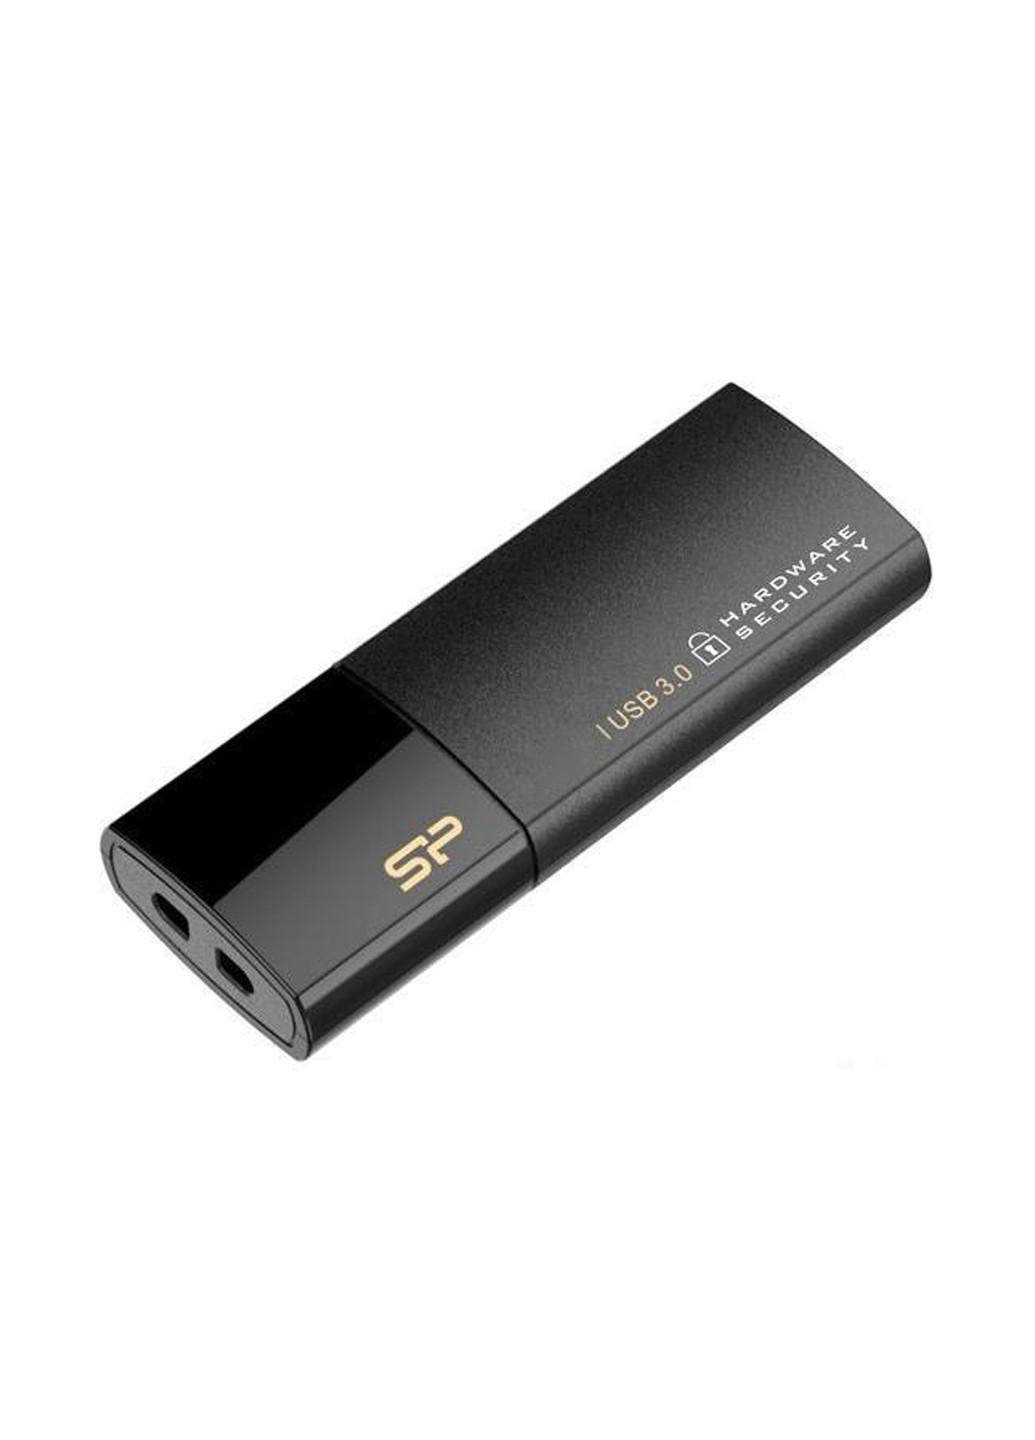 Флеш пам'ять USB 16GB Secure G50 USB 3.0 (SP016GBUF3G50V1K) Silicon Power флеш память usb silicon power 16gb secure g50 usb 3.0 (sp016gbuf3g50v1k) (136742734)